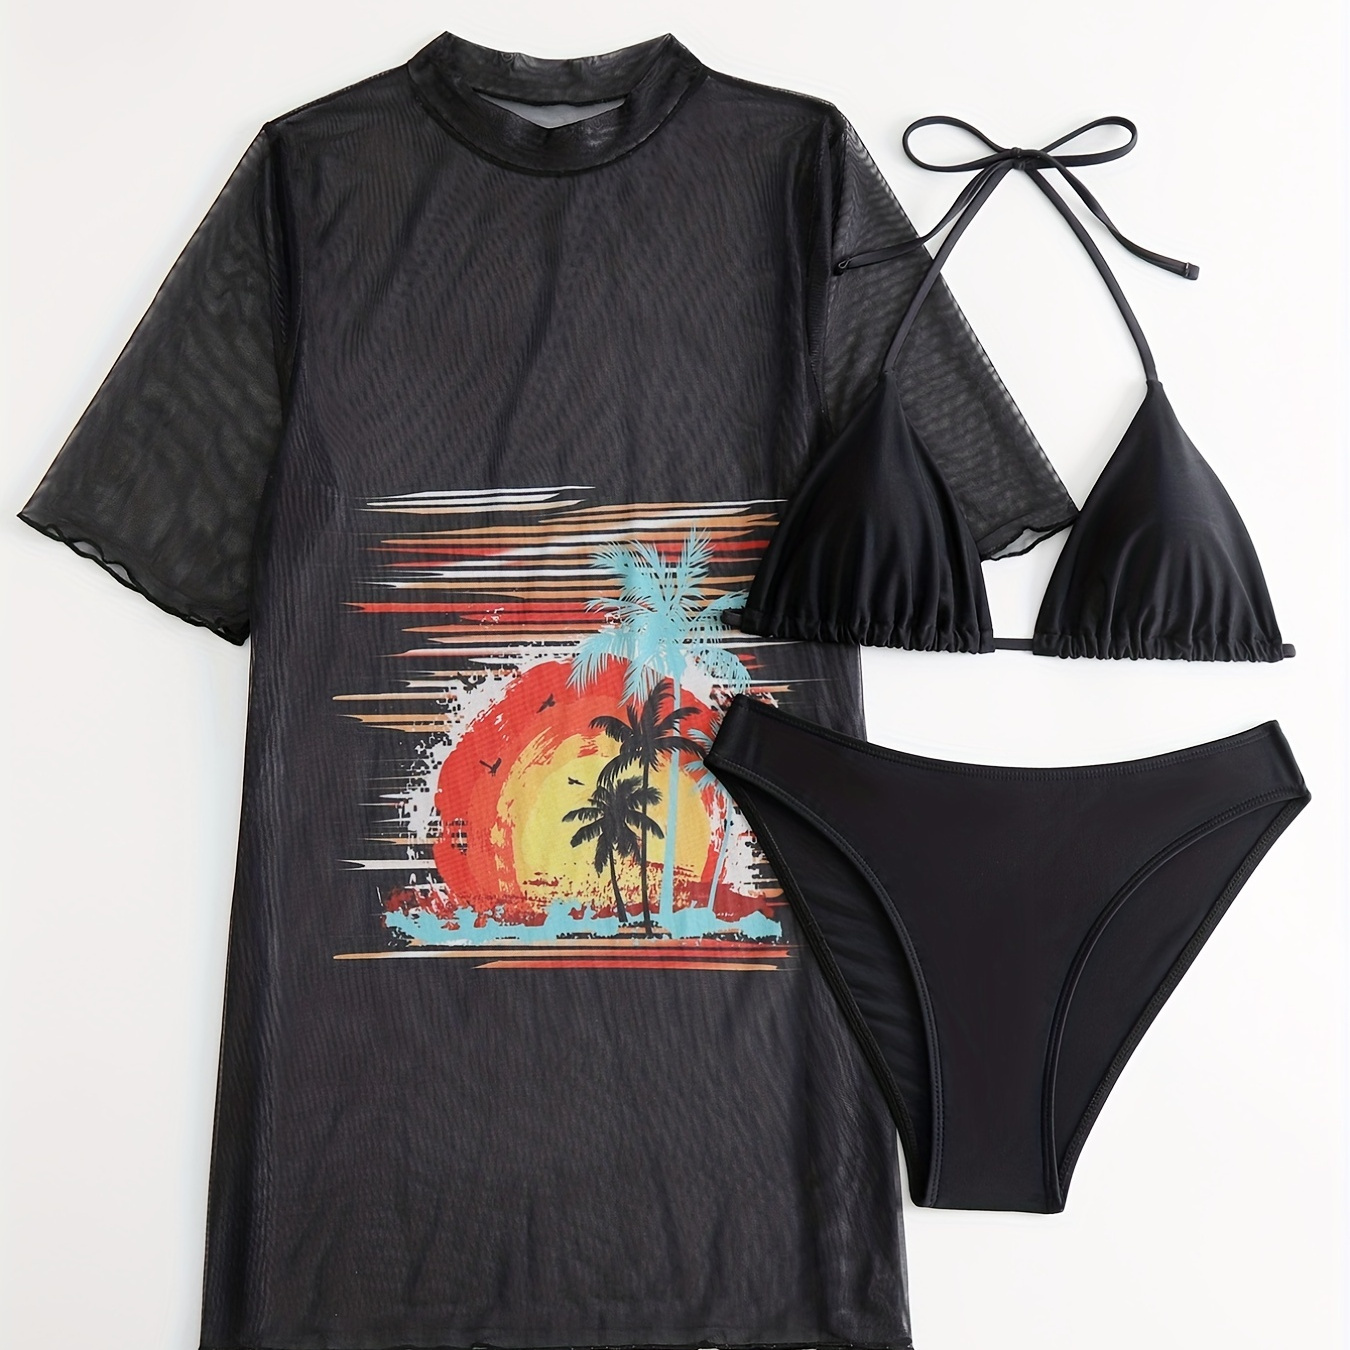 

Tropical Print Tie Neck Triangle Bikini Set, Black Halter Mesh Cover Up High Strech Swimsuit, Coconut Sunset Pattern Vacation Style 3 Piece Set, Women's Swimwear & Clothing